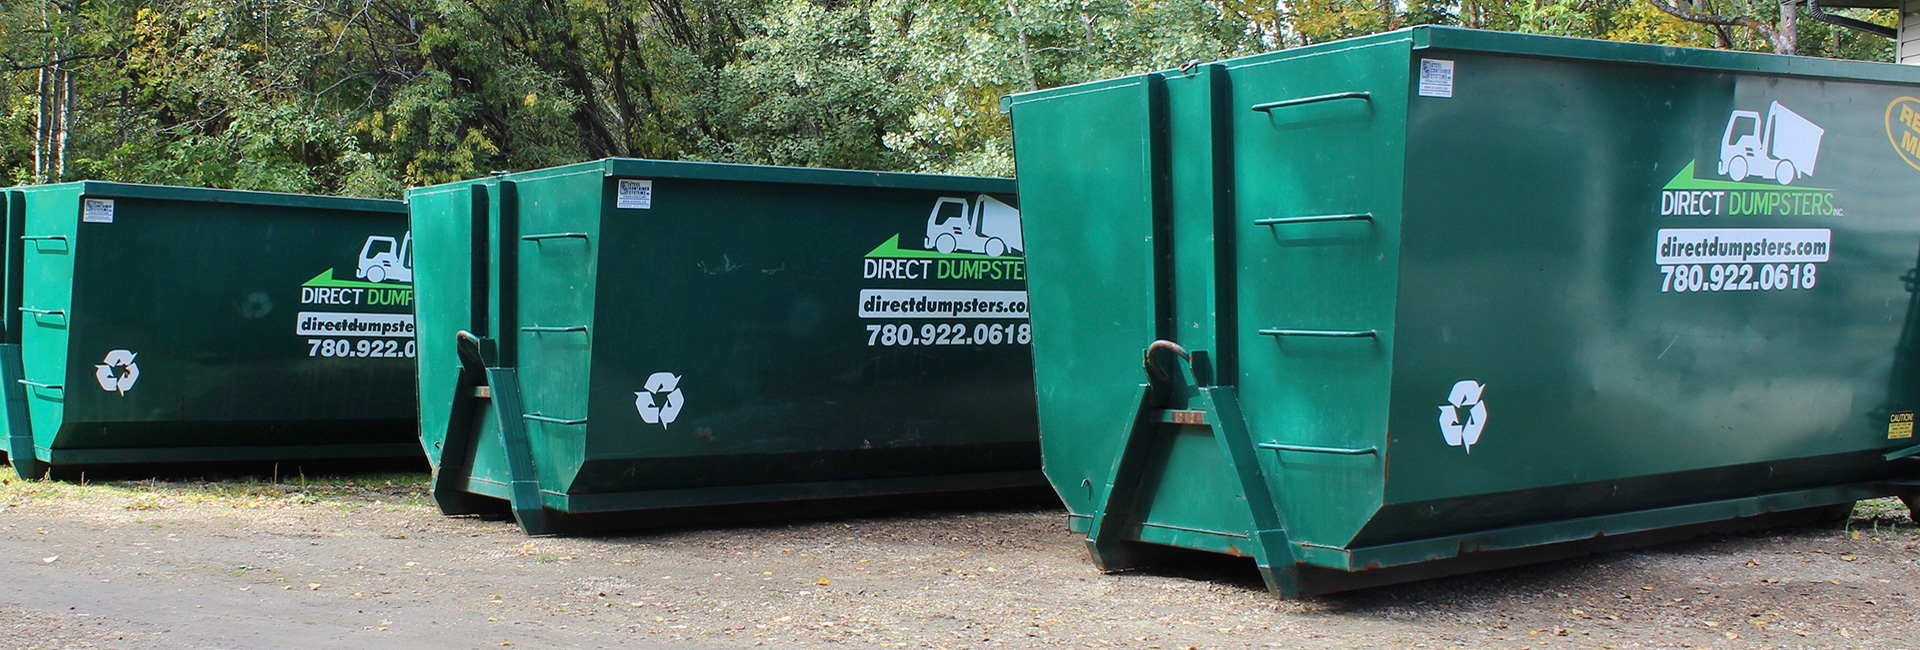 Direct Dumpsters Garbage Bin Sizes